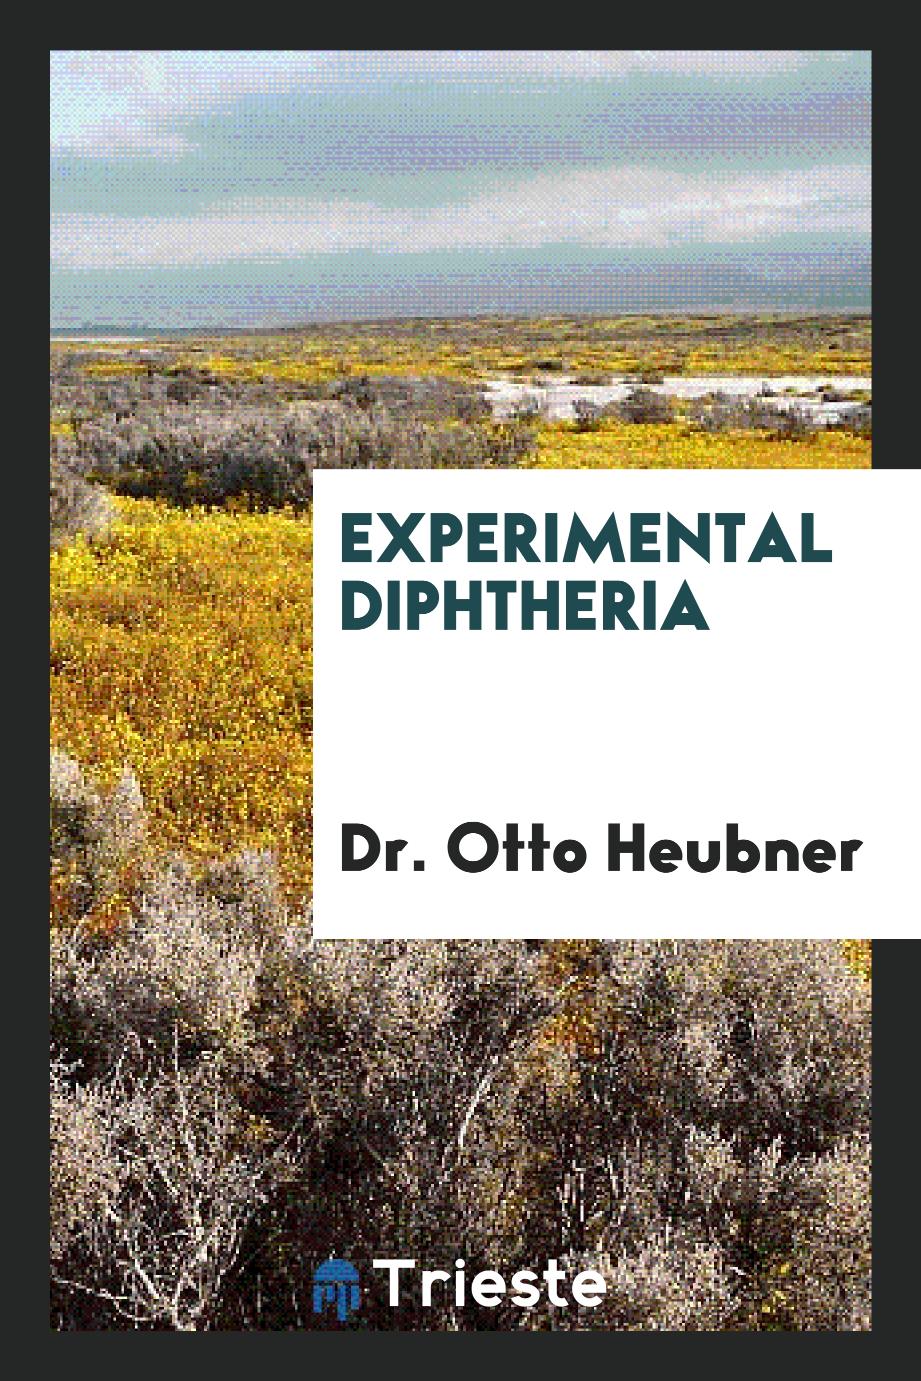 Experimental diphtheria